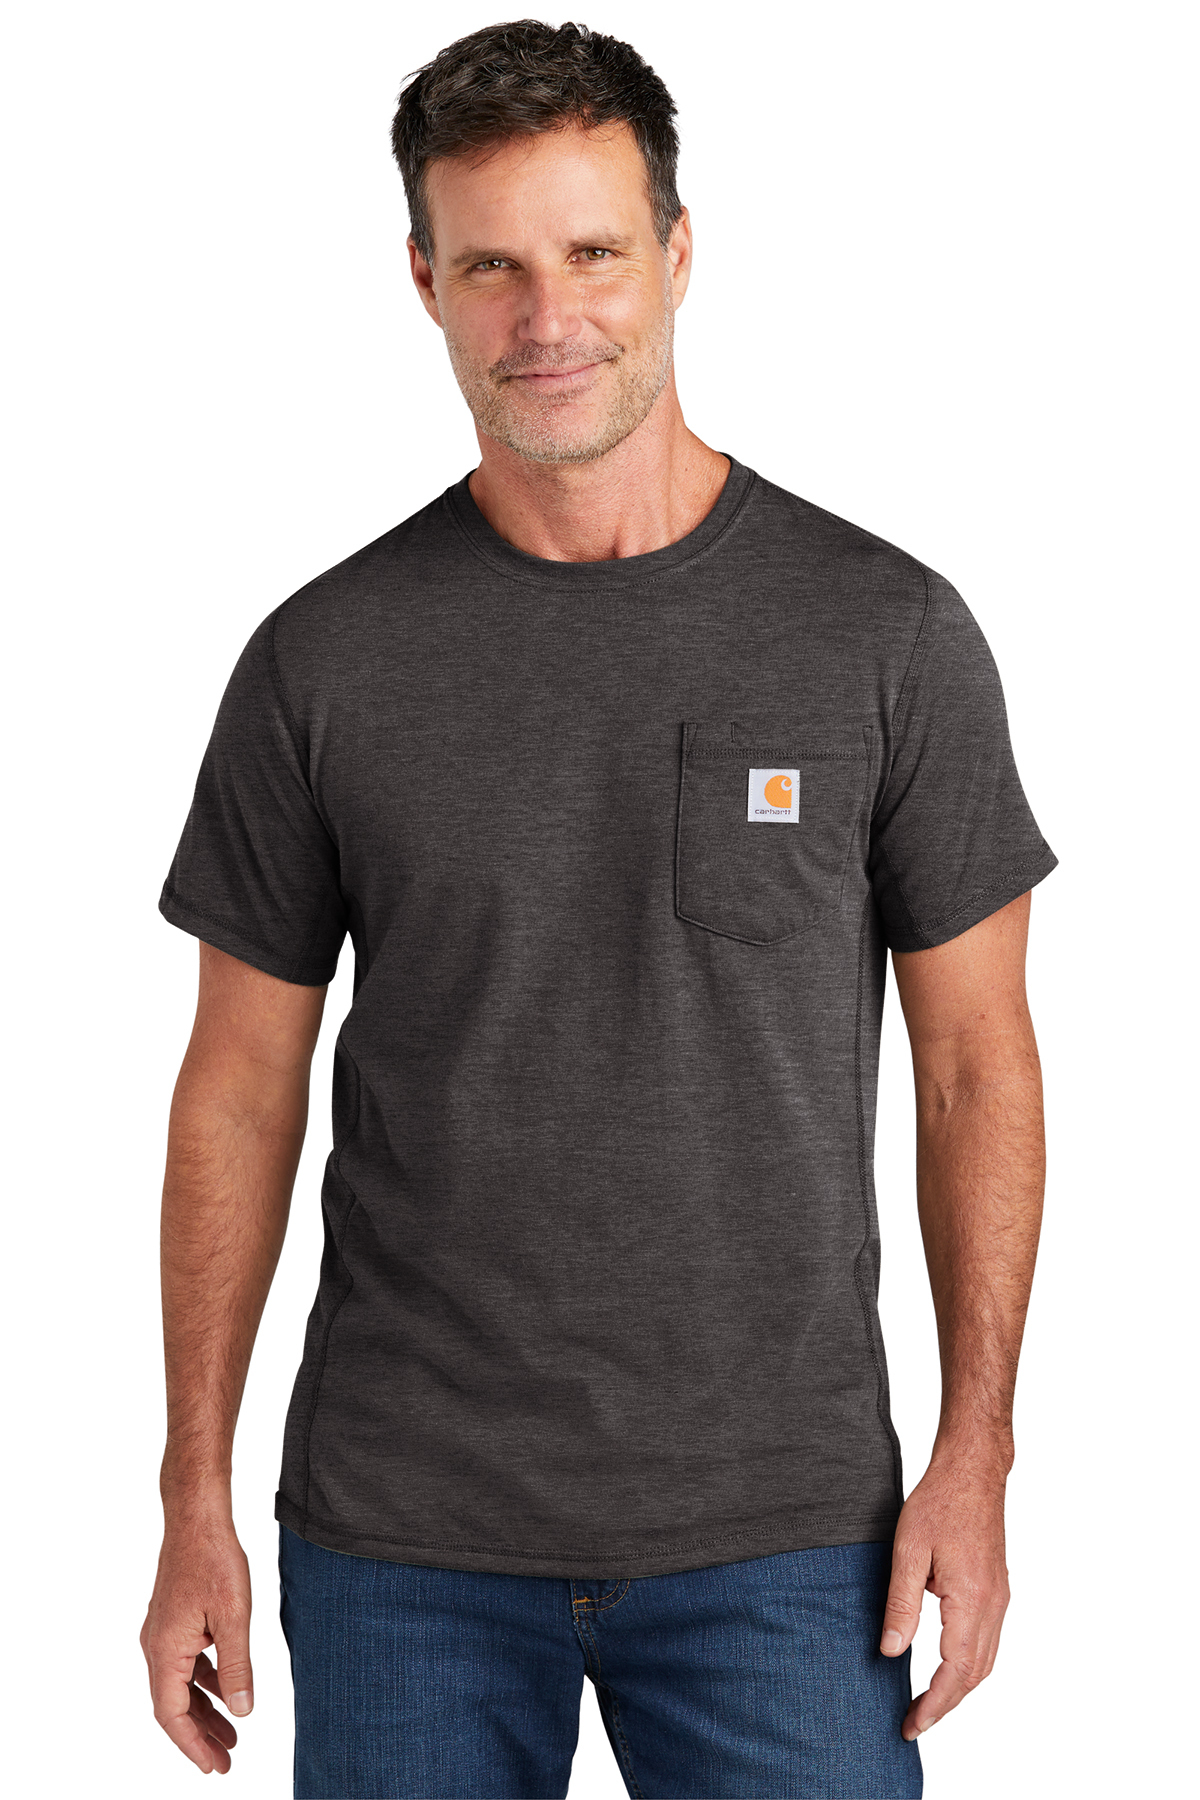 Carhartt Force Pocket Tee -Short Sleeve Performance T-shirt